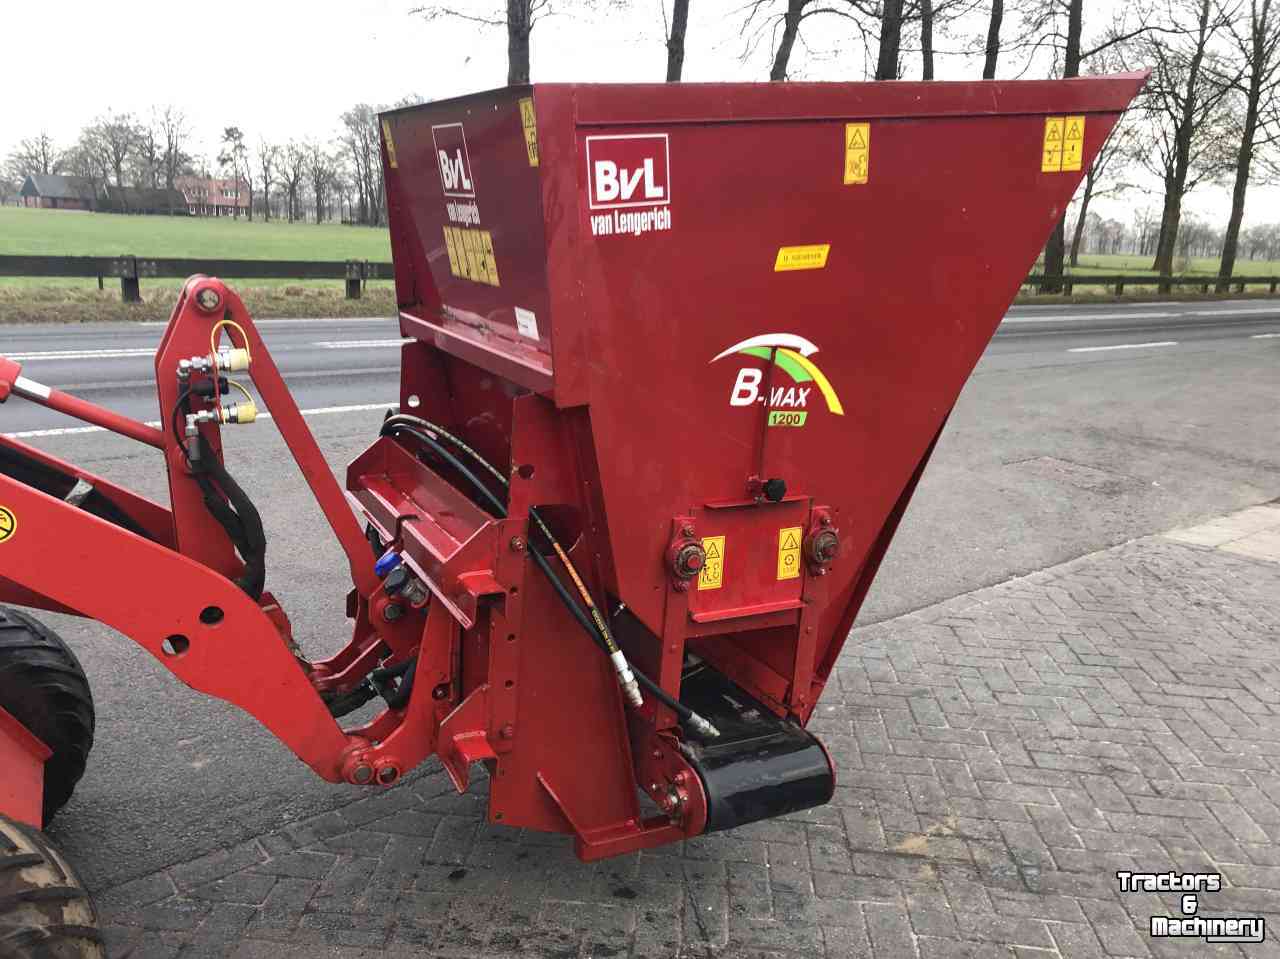 Sawdust spreader for boxes BVL B-max 1200-VS